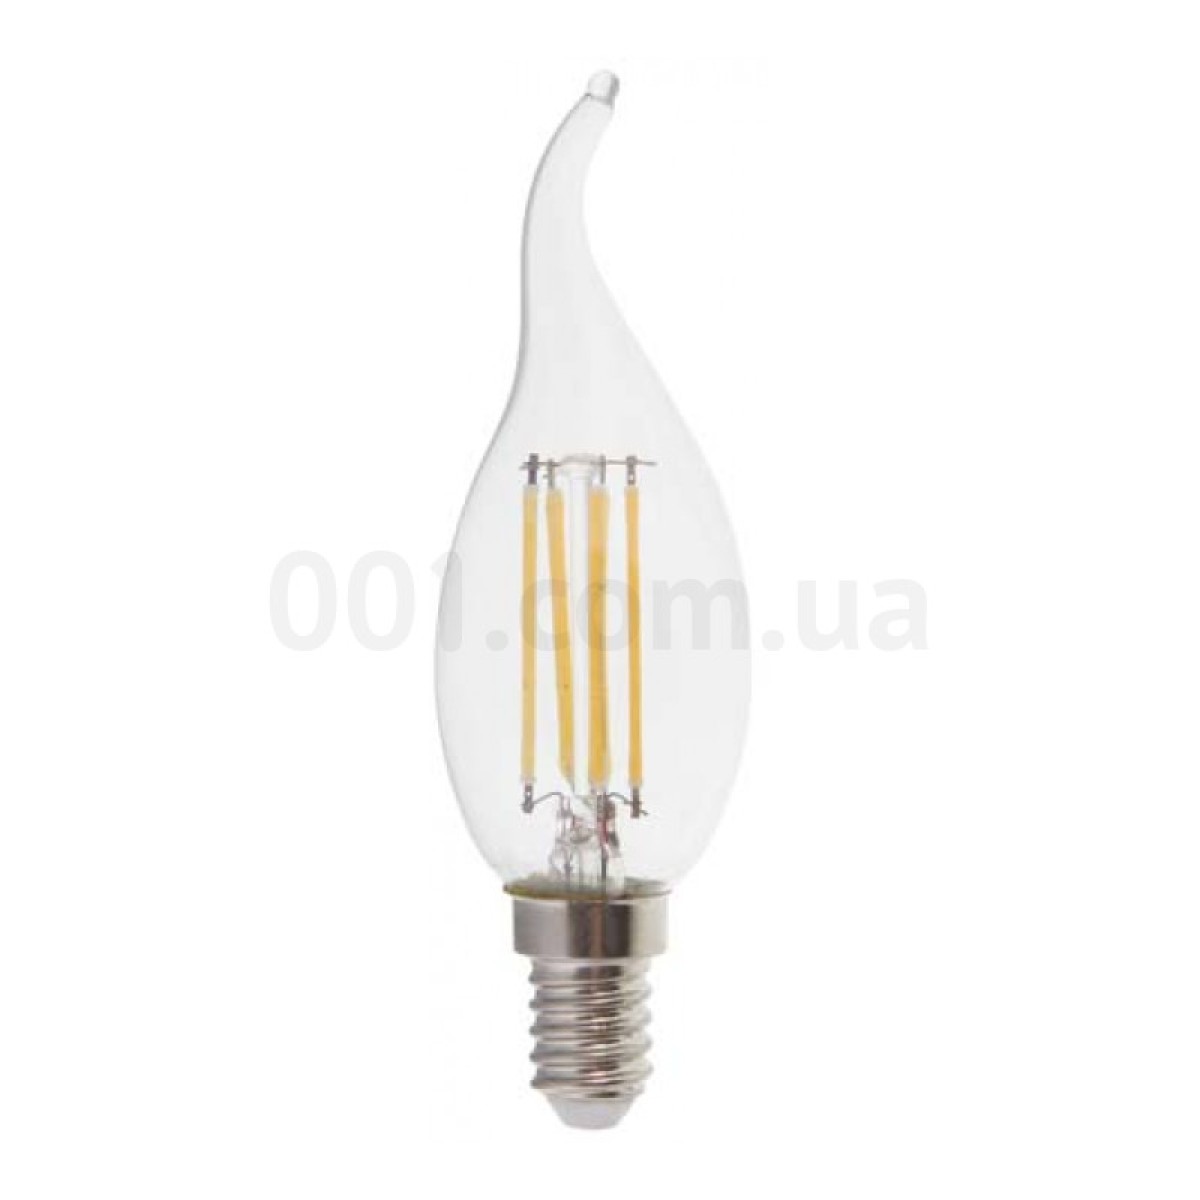 Светодиодная лампа LB-59 CF37 (свеча на ветру) филамент 4Вт 2700K E14, Feron 256_256.jpg